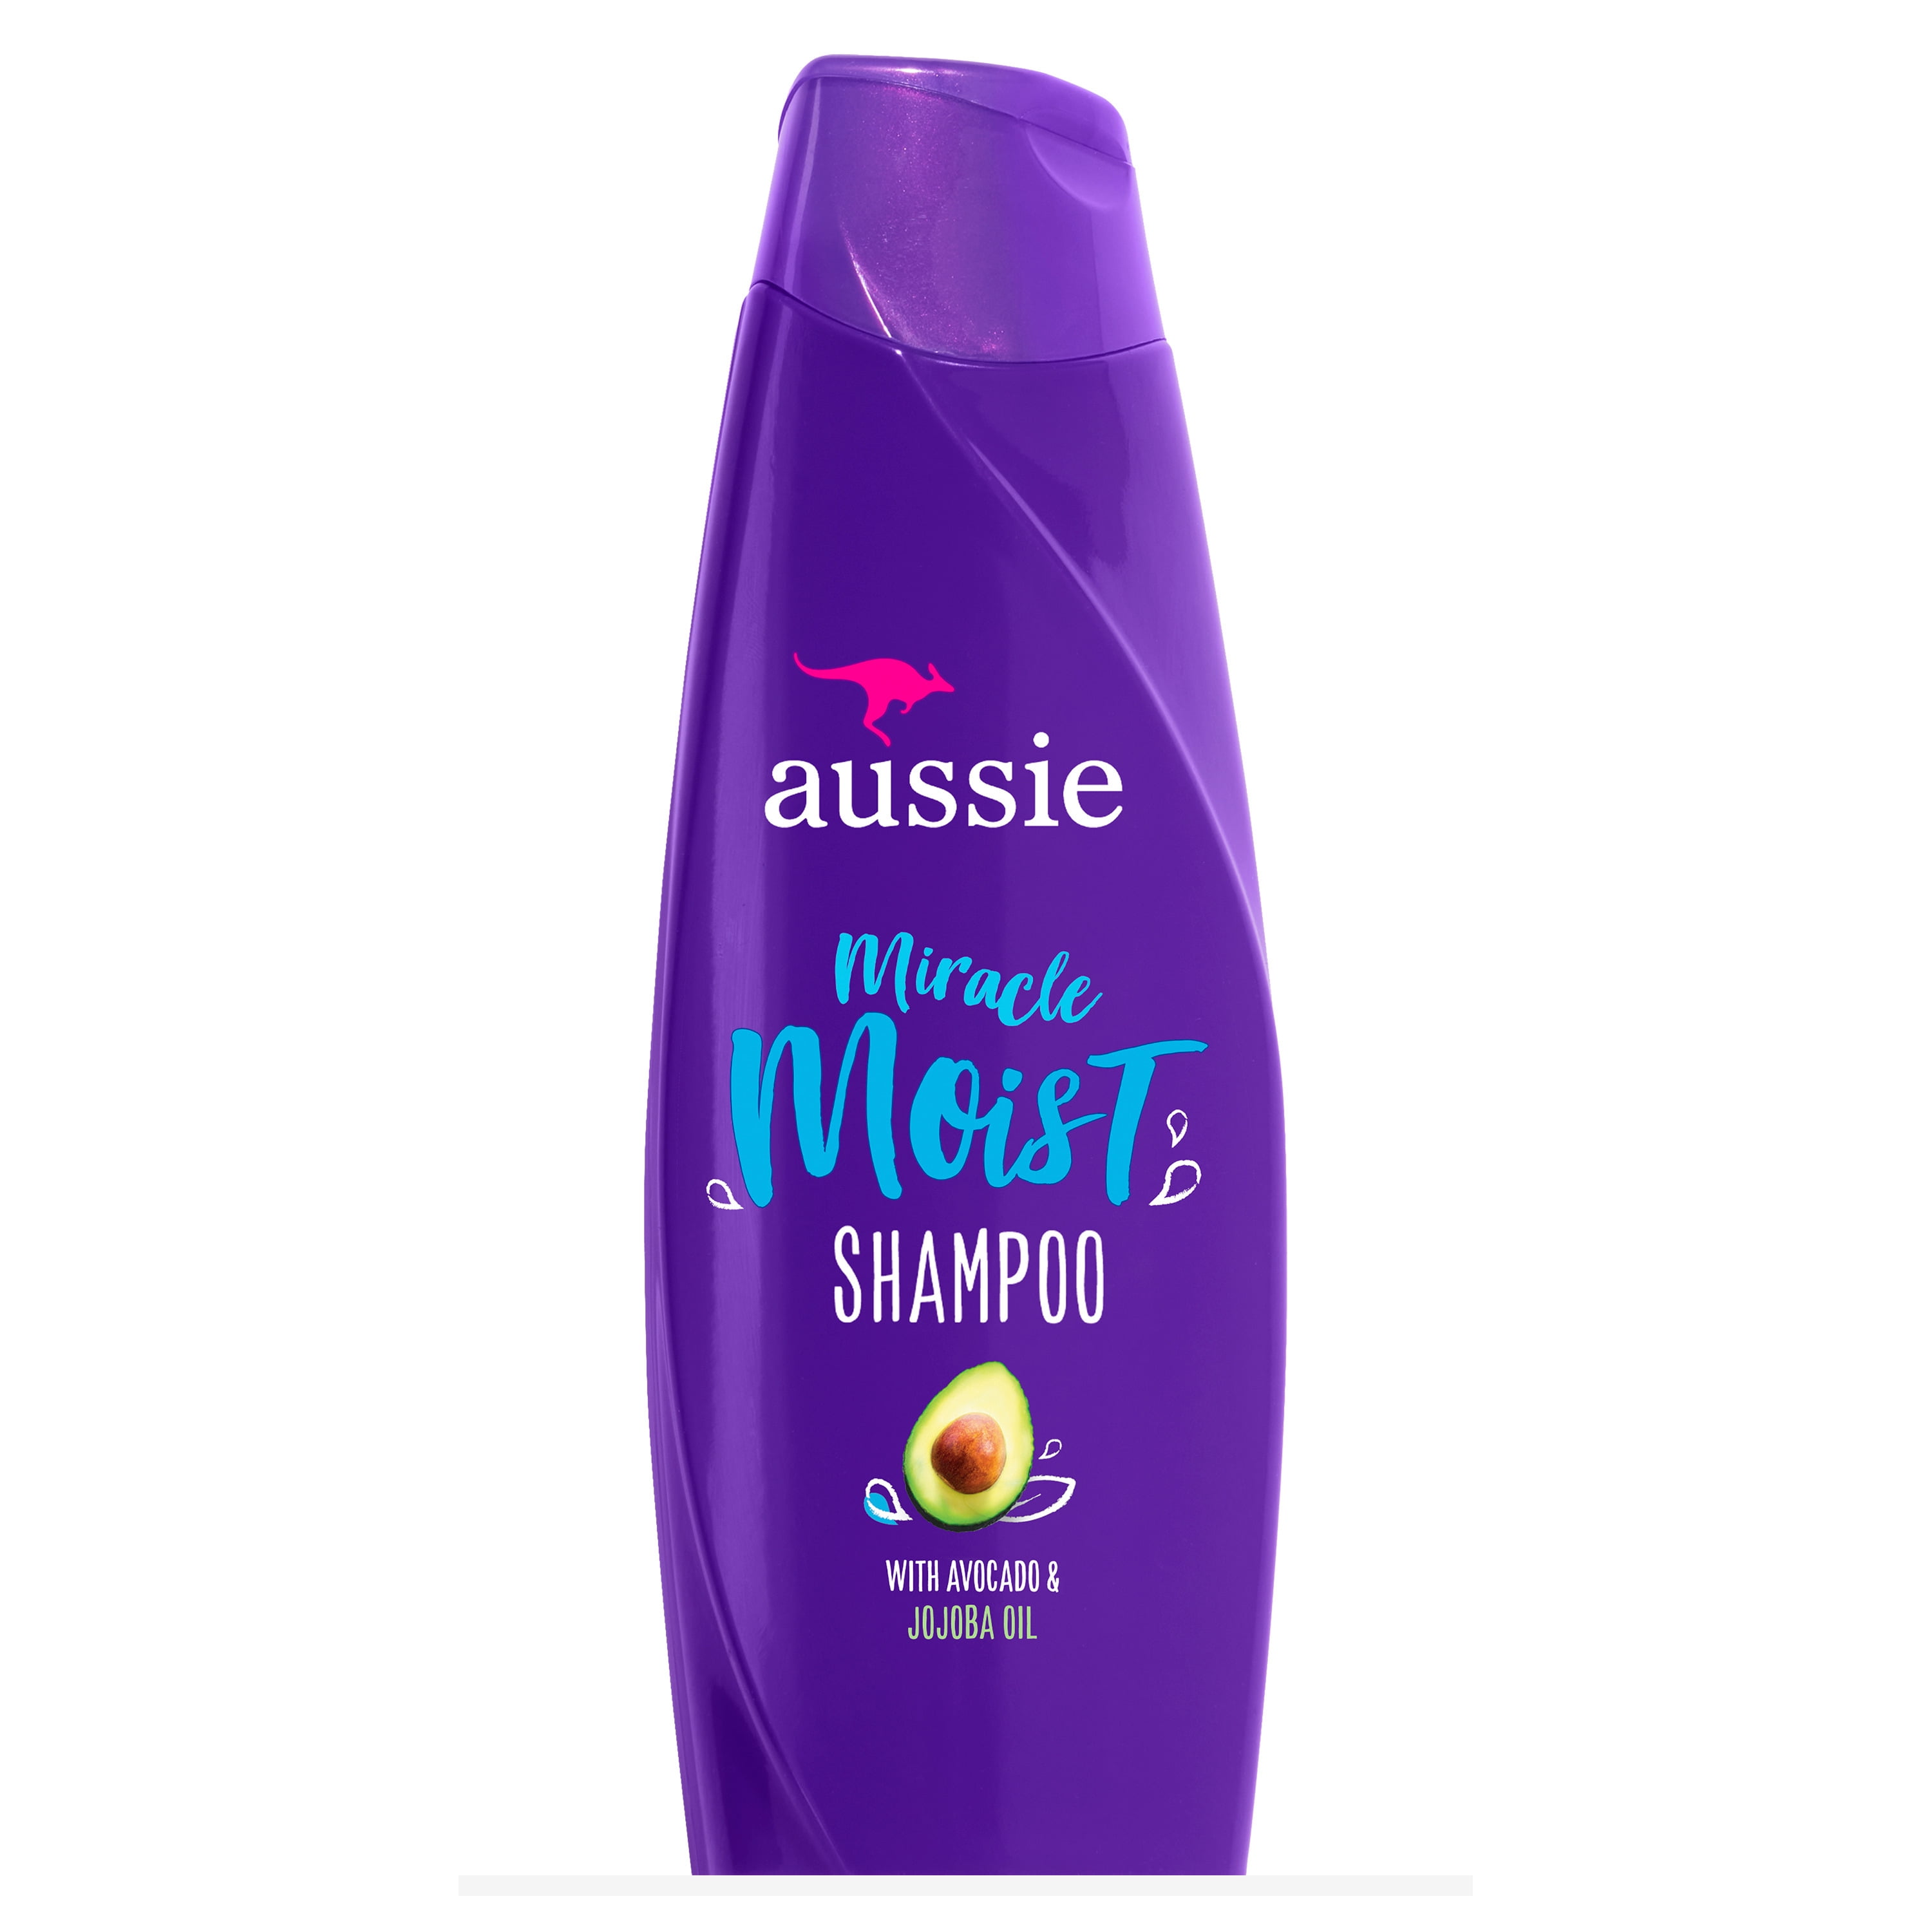 Aussie Miracle Shampoo with Avocado, Paraben Free, 12.1 fl oz - Walmart.com